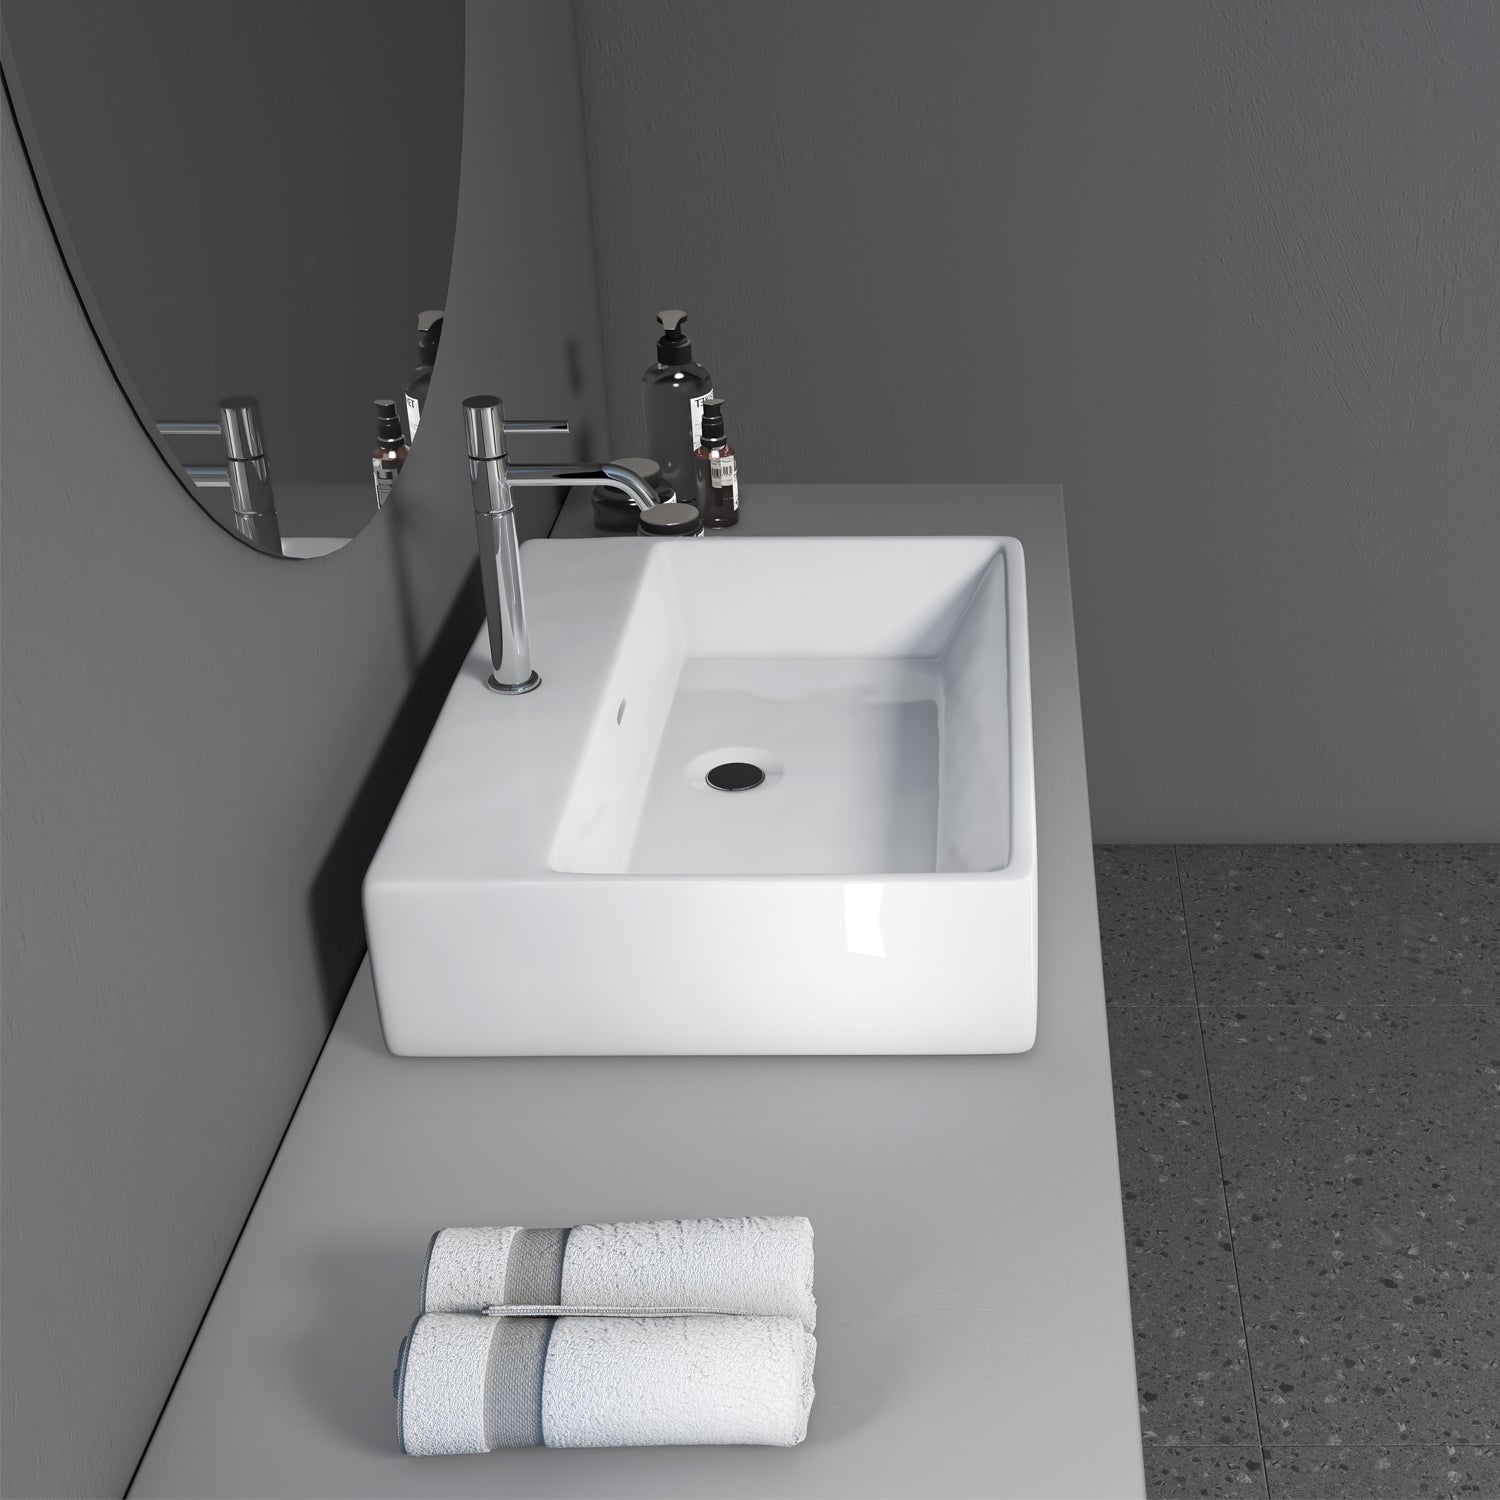 Fremont 24" Rectangle Ceramic Vessel Bathroom Vanity Sink with Overflow